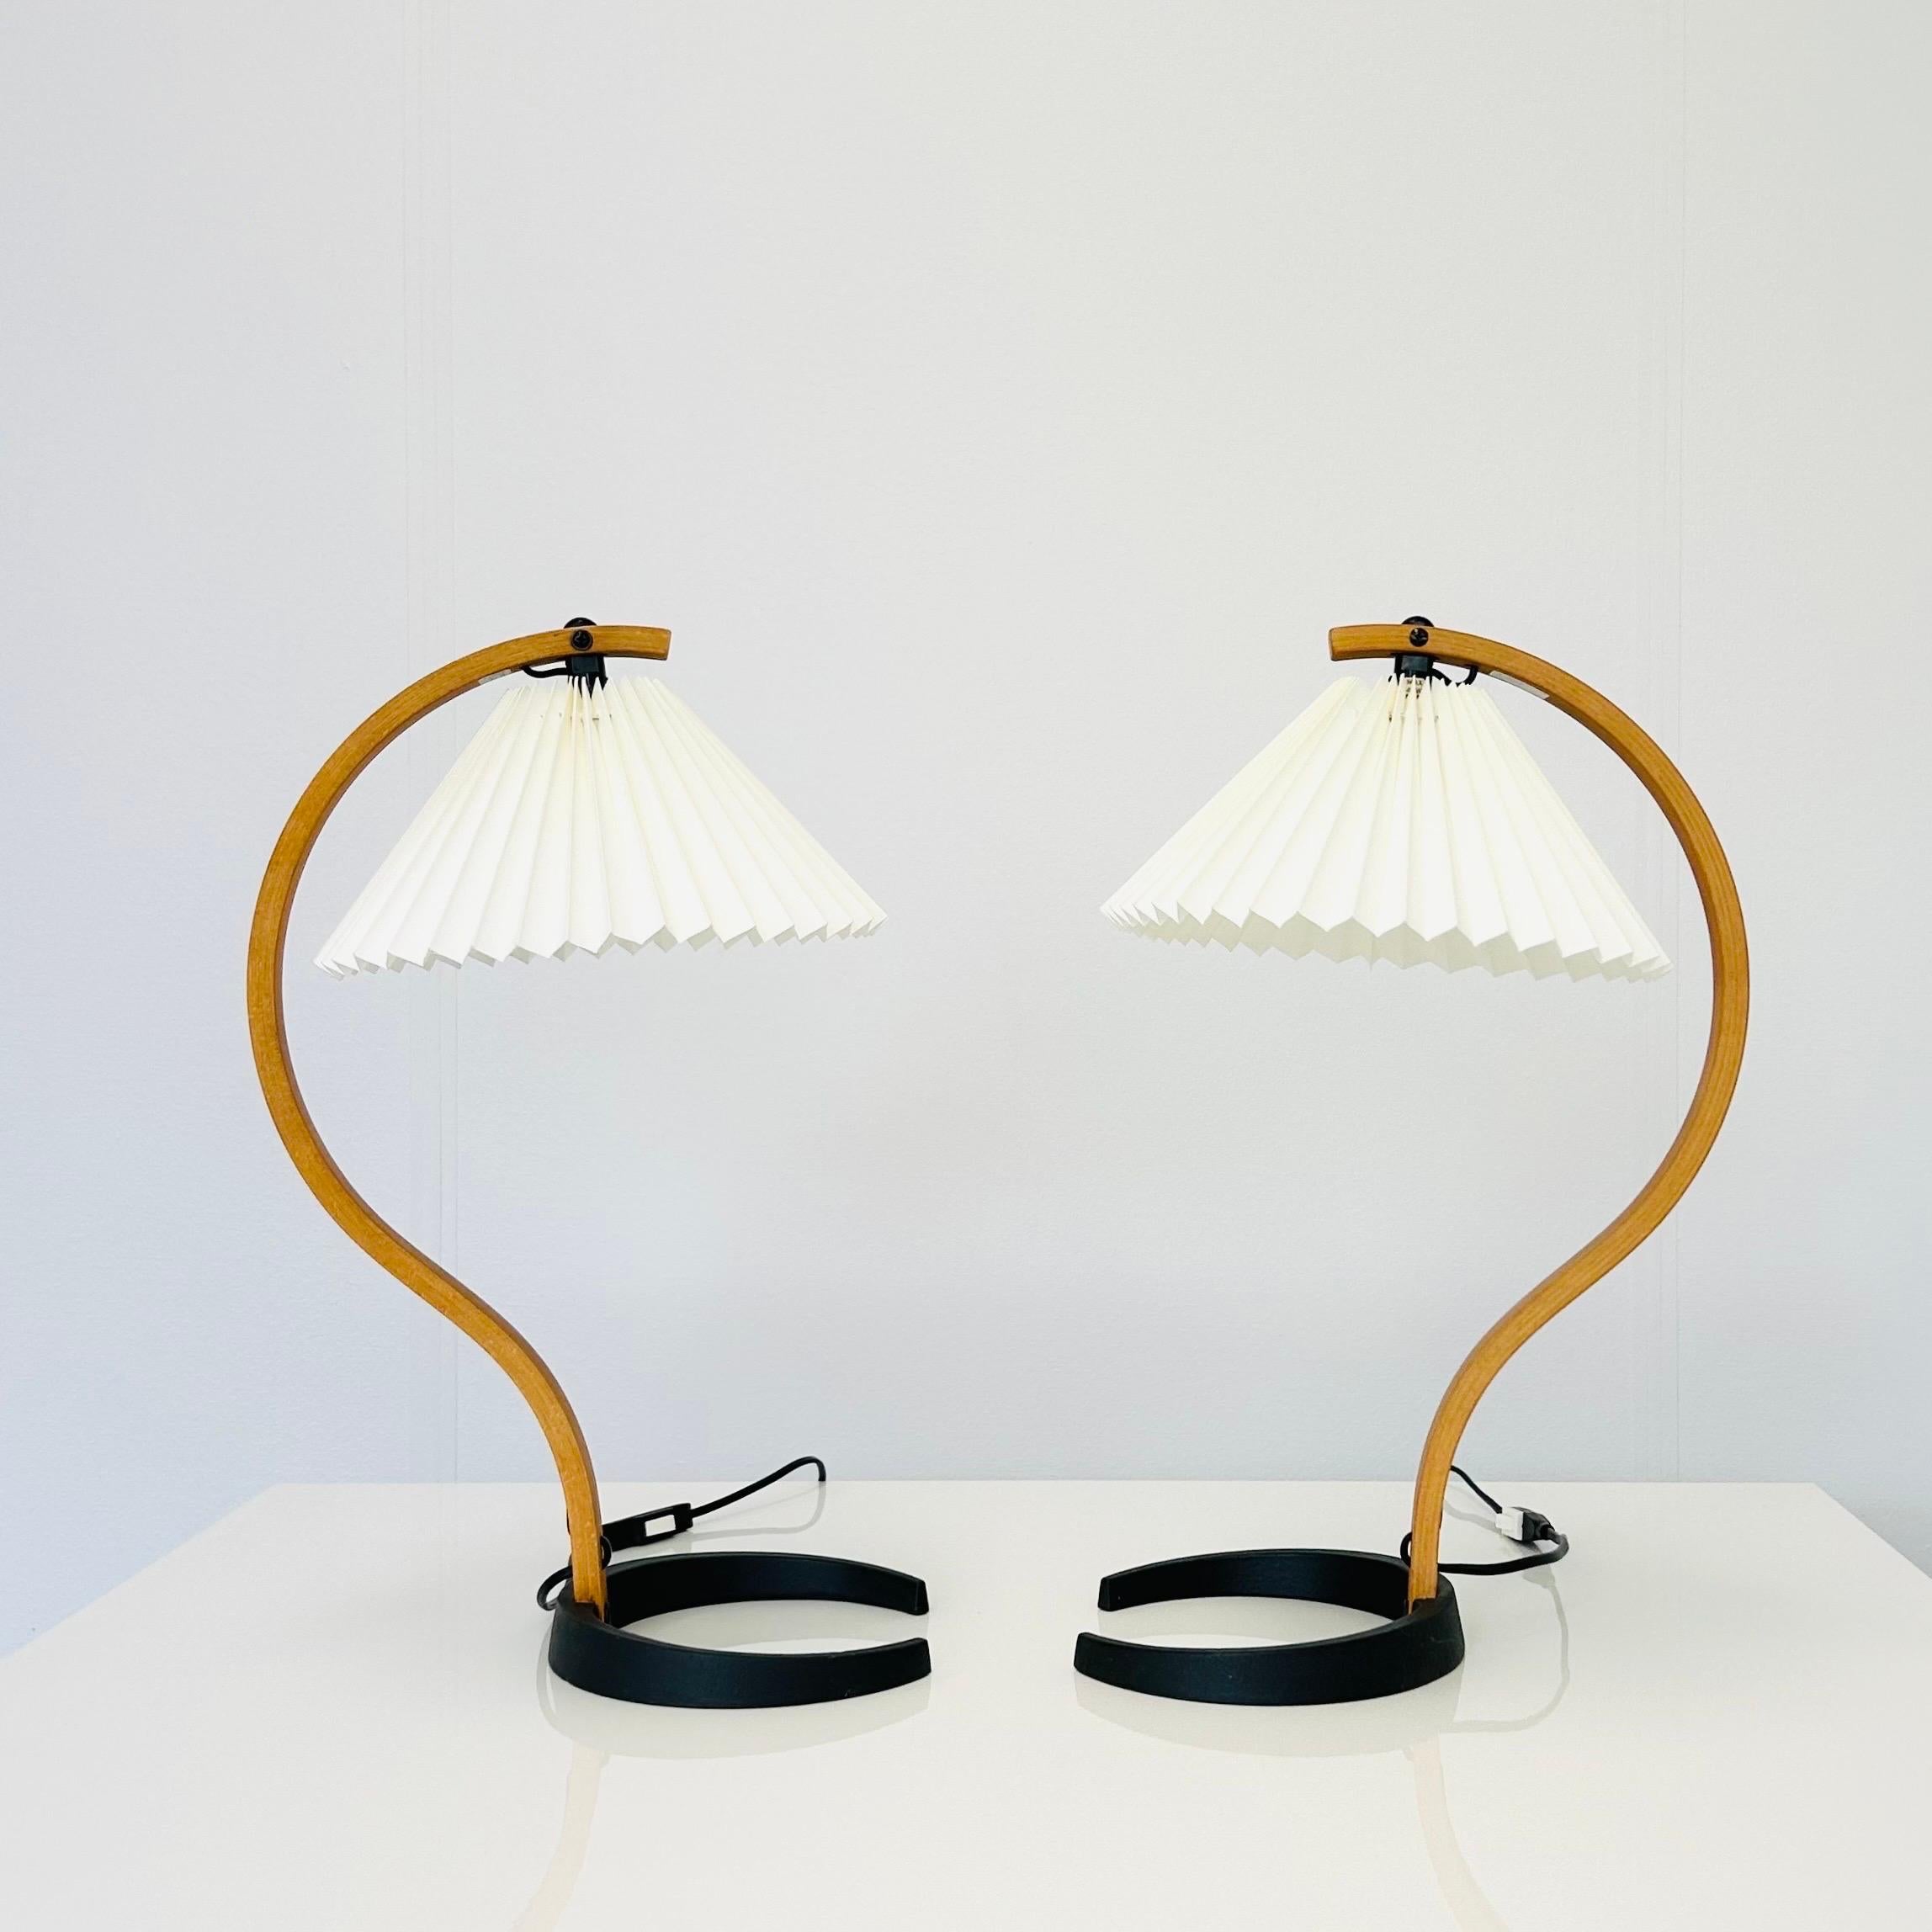 Set of Original Danish Caprani Desk Lamps, 1970s, Denmark 1